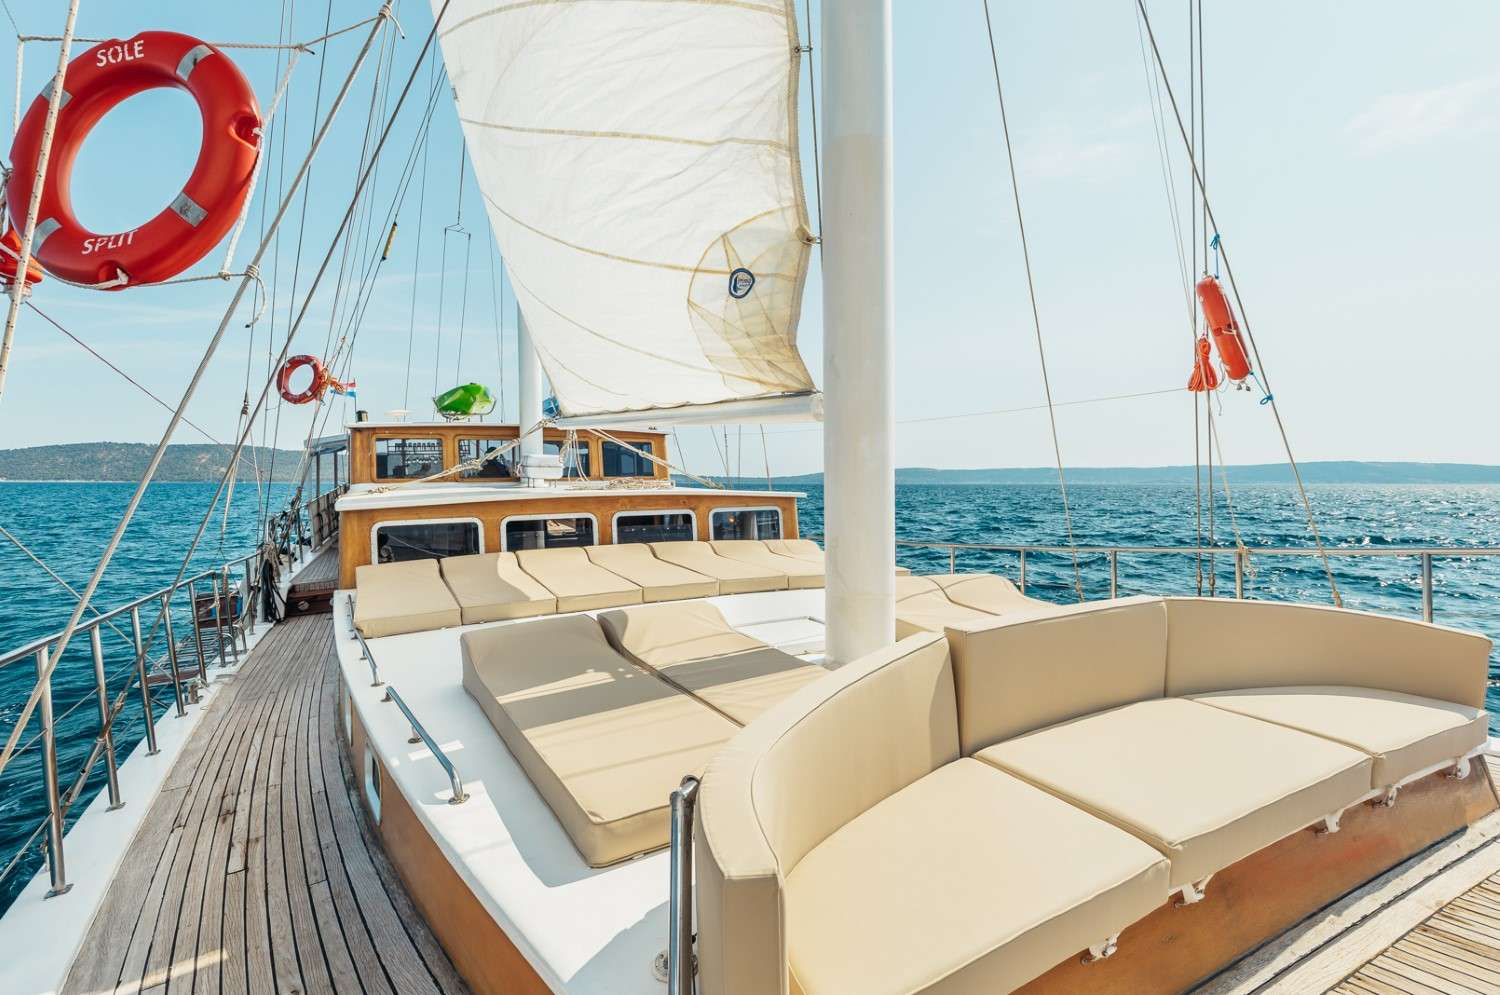 Sole  - Yacht Charter Milna & Boat hire in Croatia 5